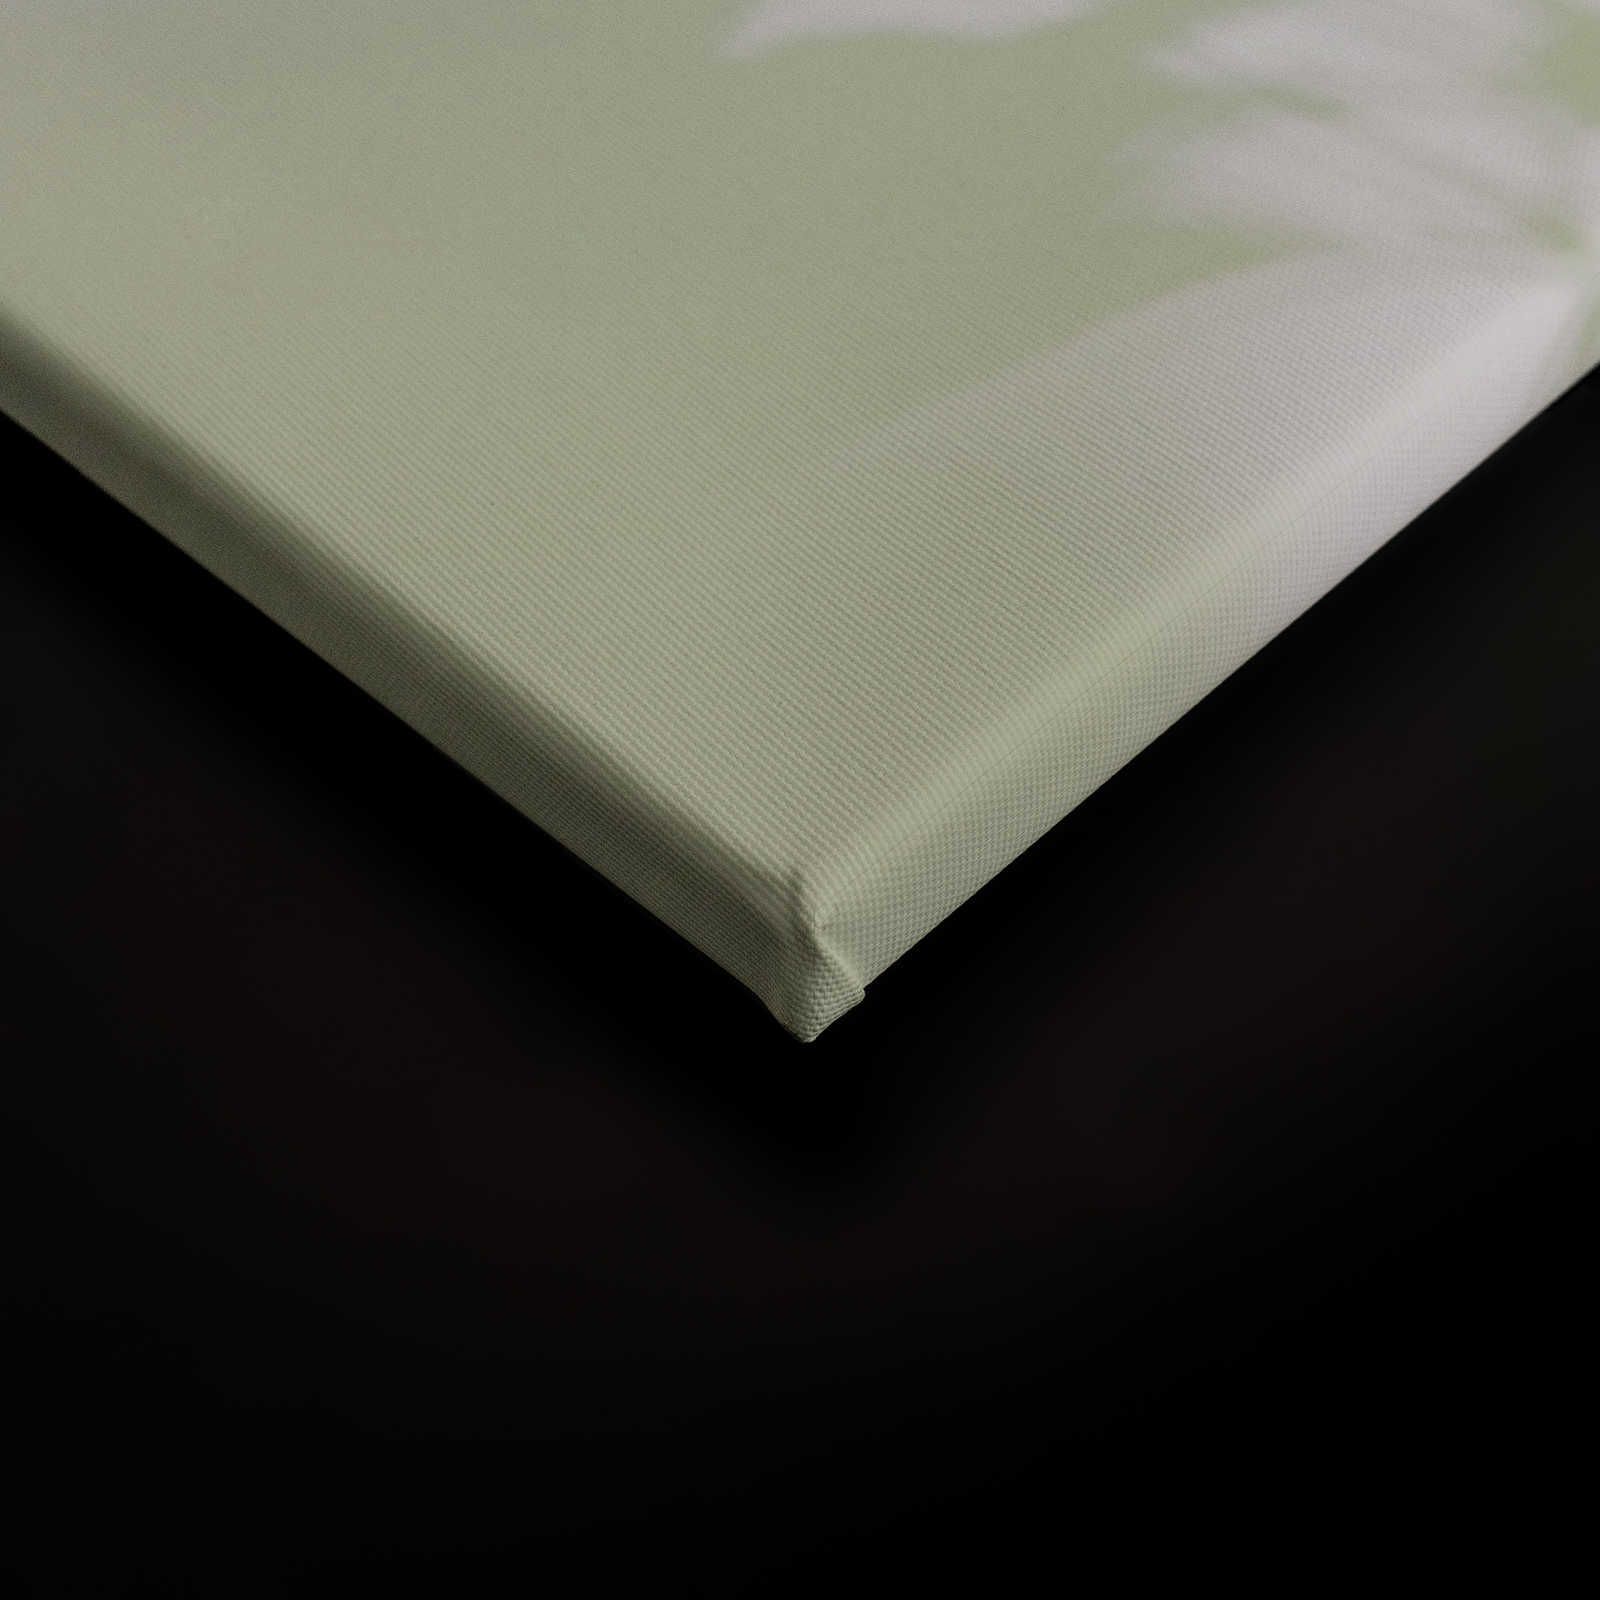             Camera d'ombra 3 - Pittura su tela naturale verde e bianca, disegno sbiadito - 0,90 m x 0,60 m
        